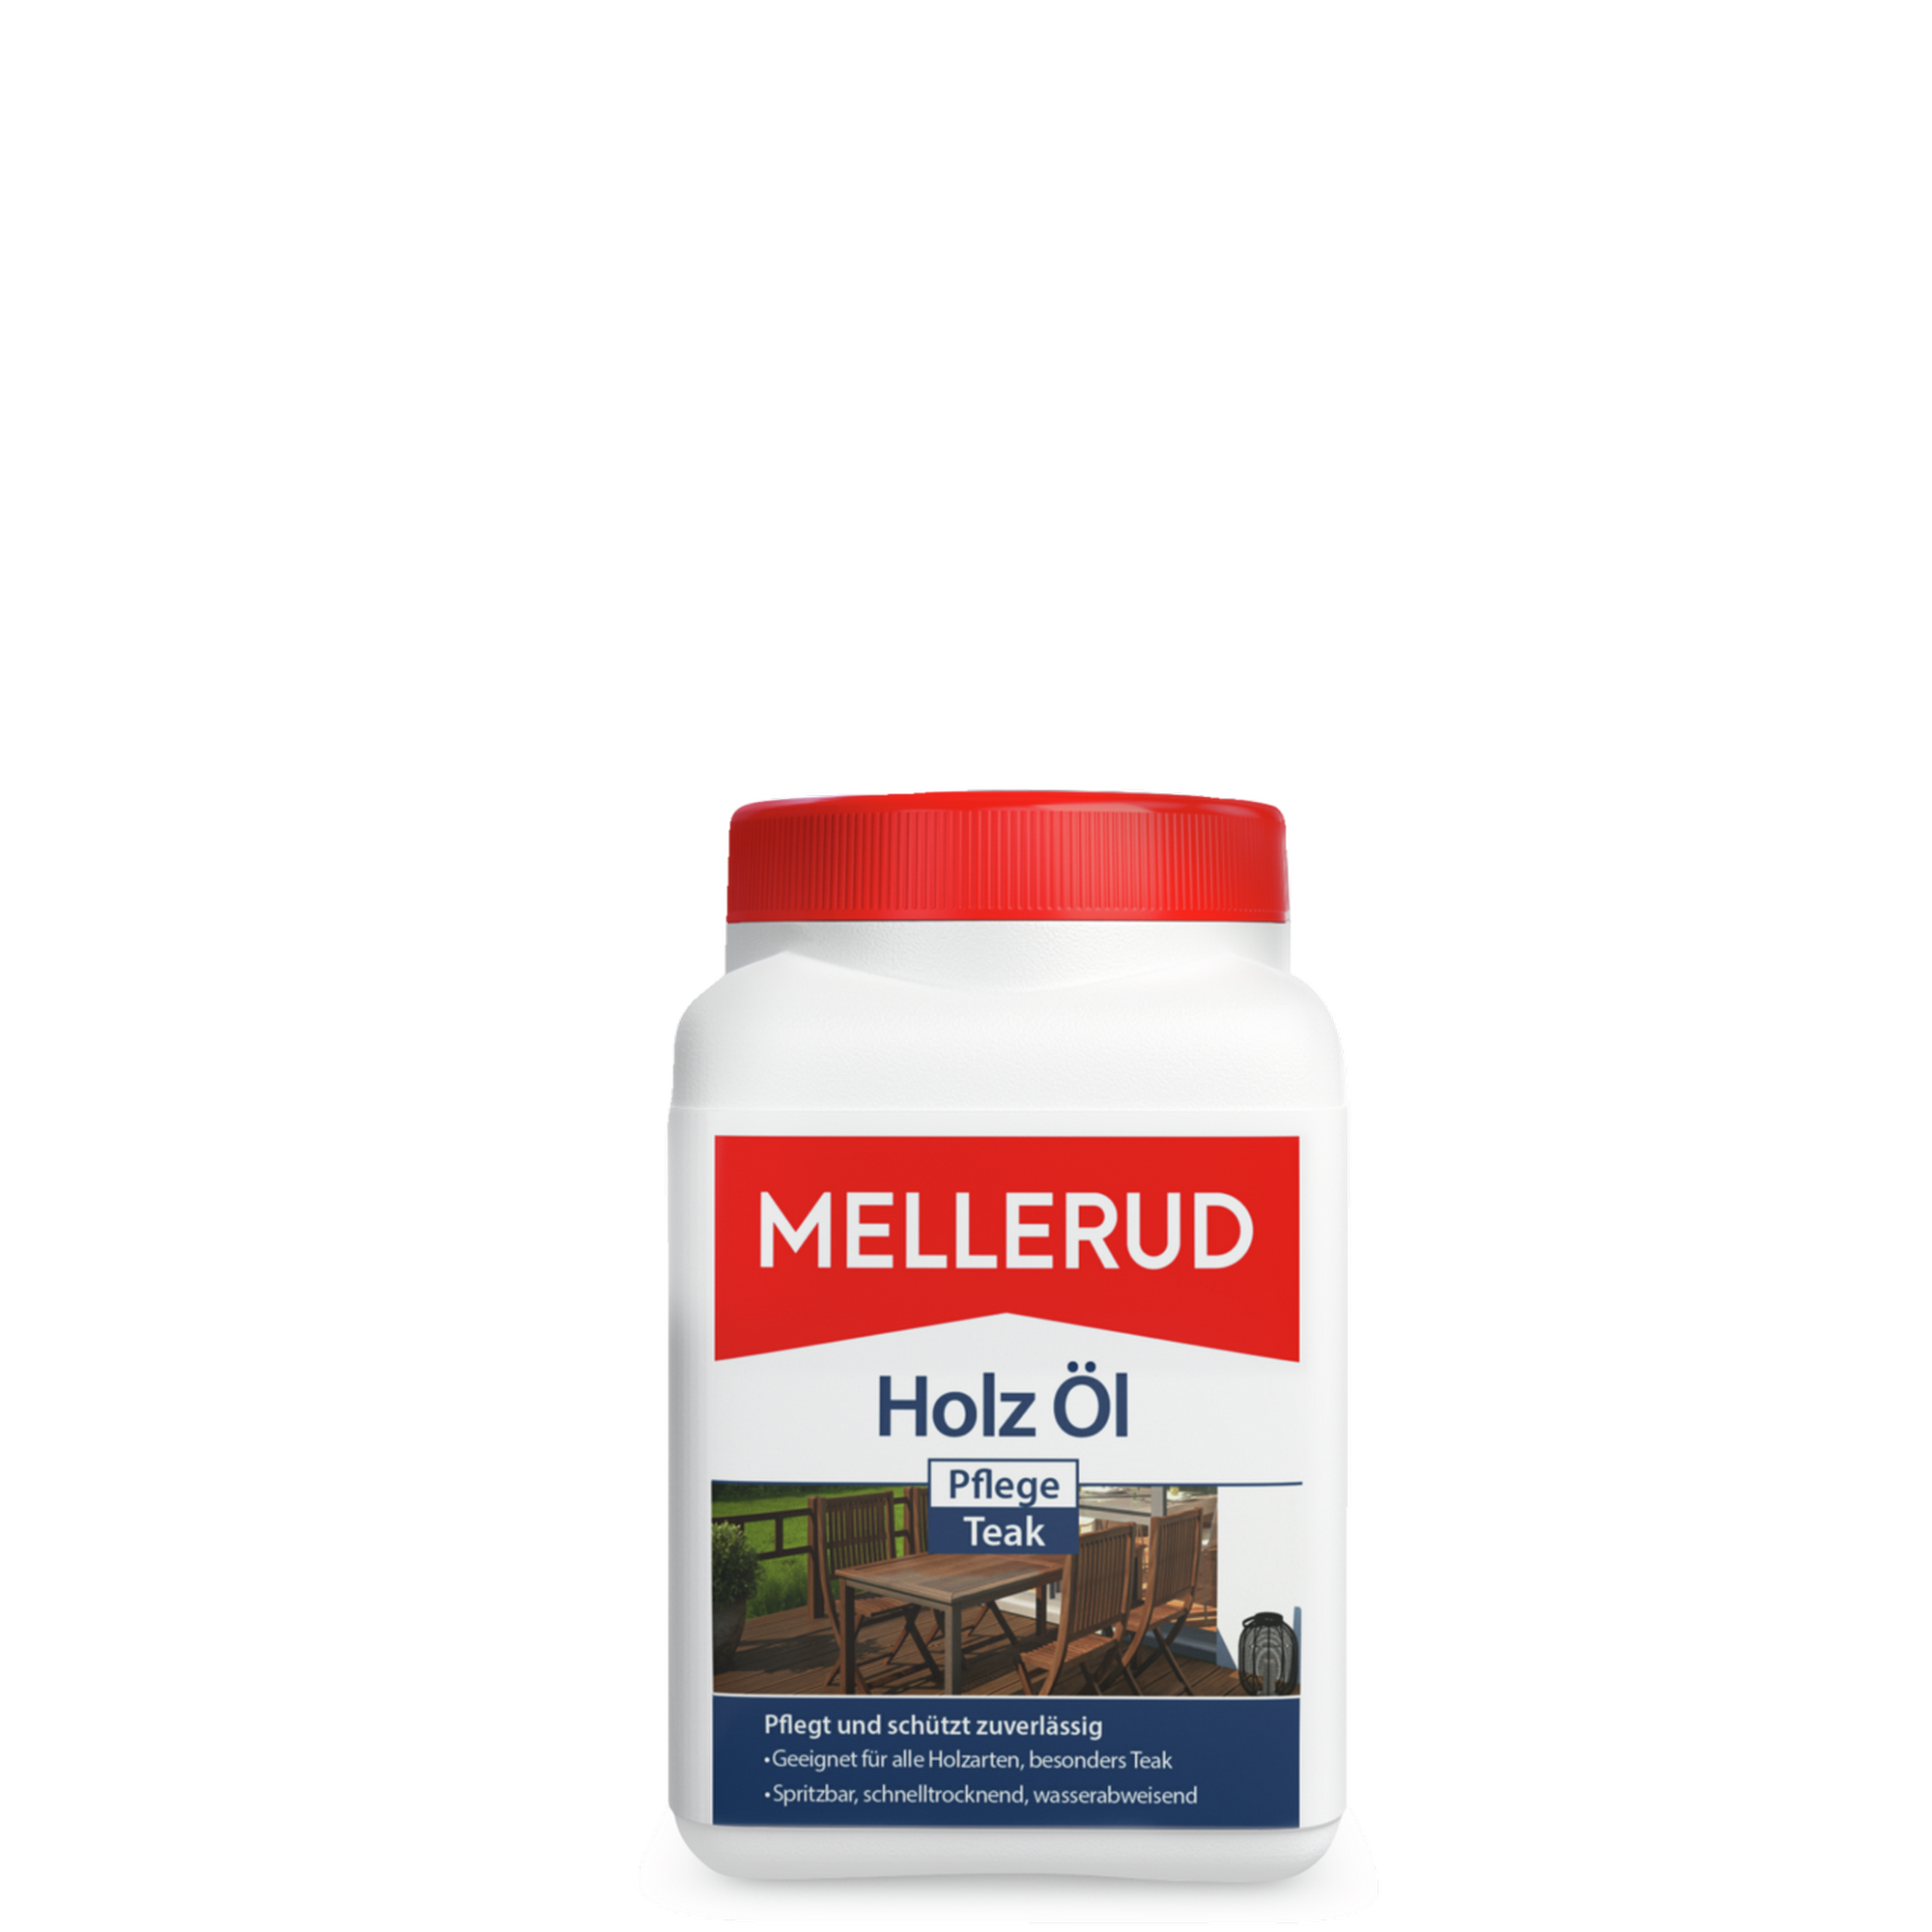 Holzöl teakfarben 750 ml + product picture